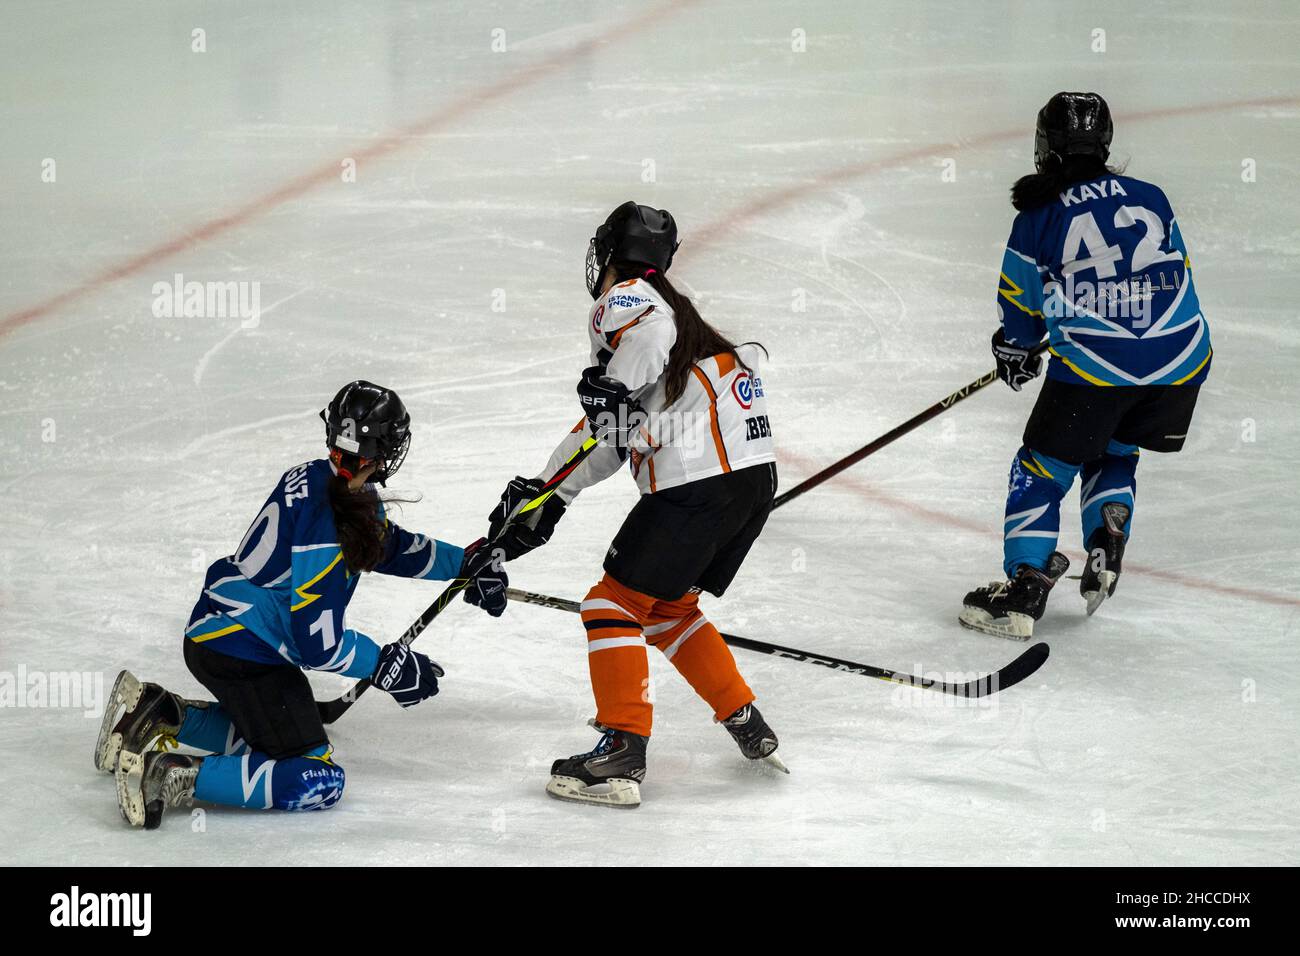 Istanbul İbb - Flash Ice Club Teams in Turkish Ice Hockey Federation Women's Super League Stock Photo